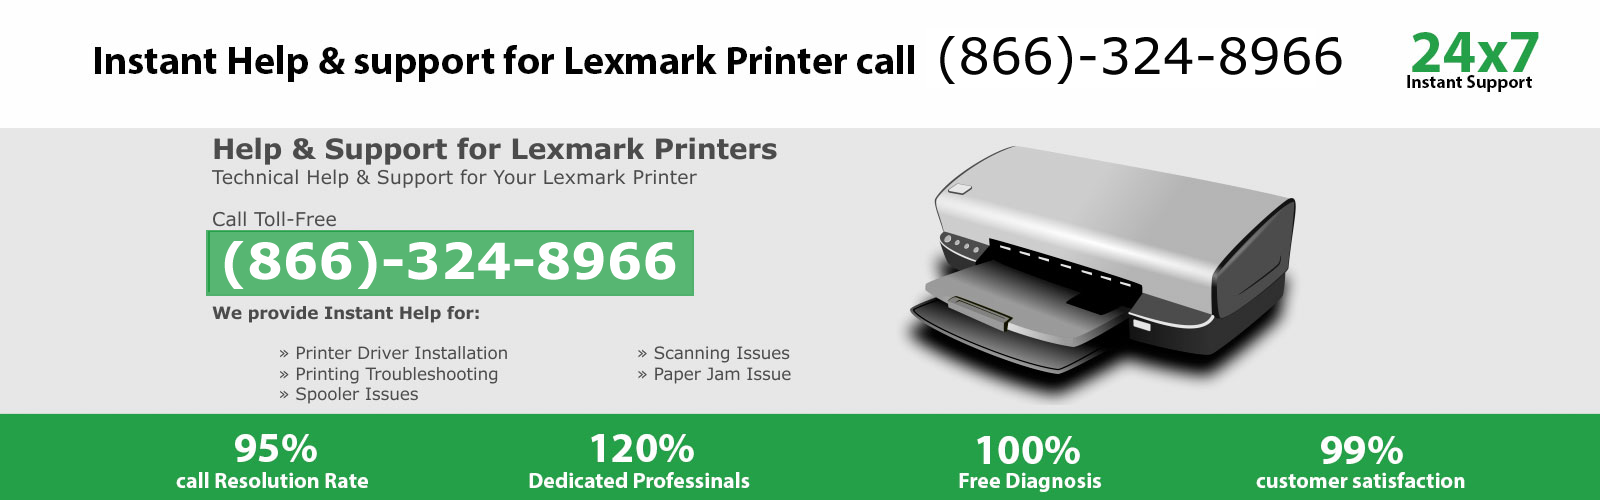 Lexmark Printer Toll Free Number